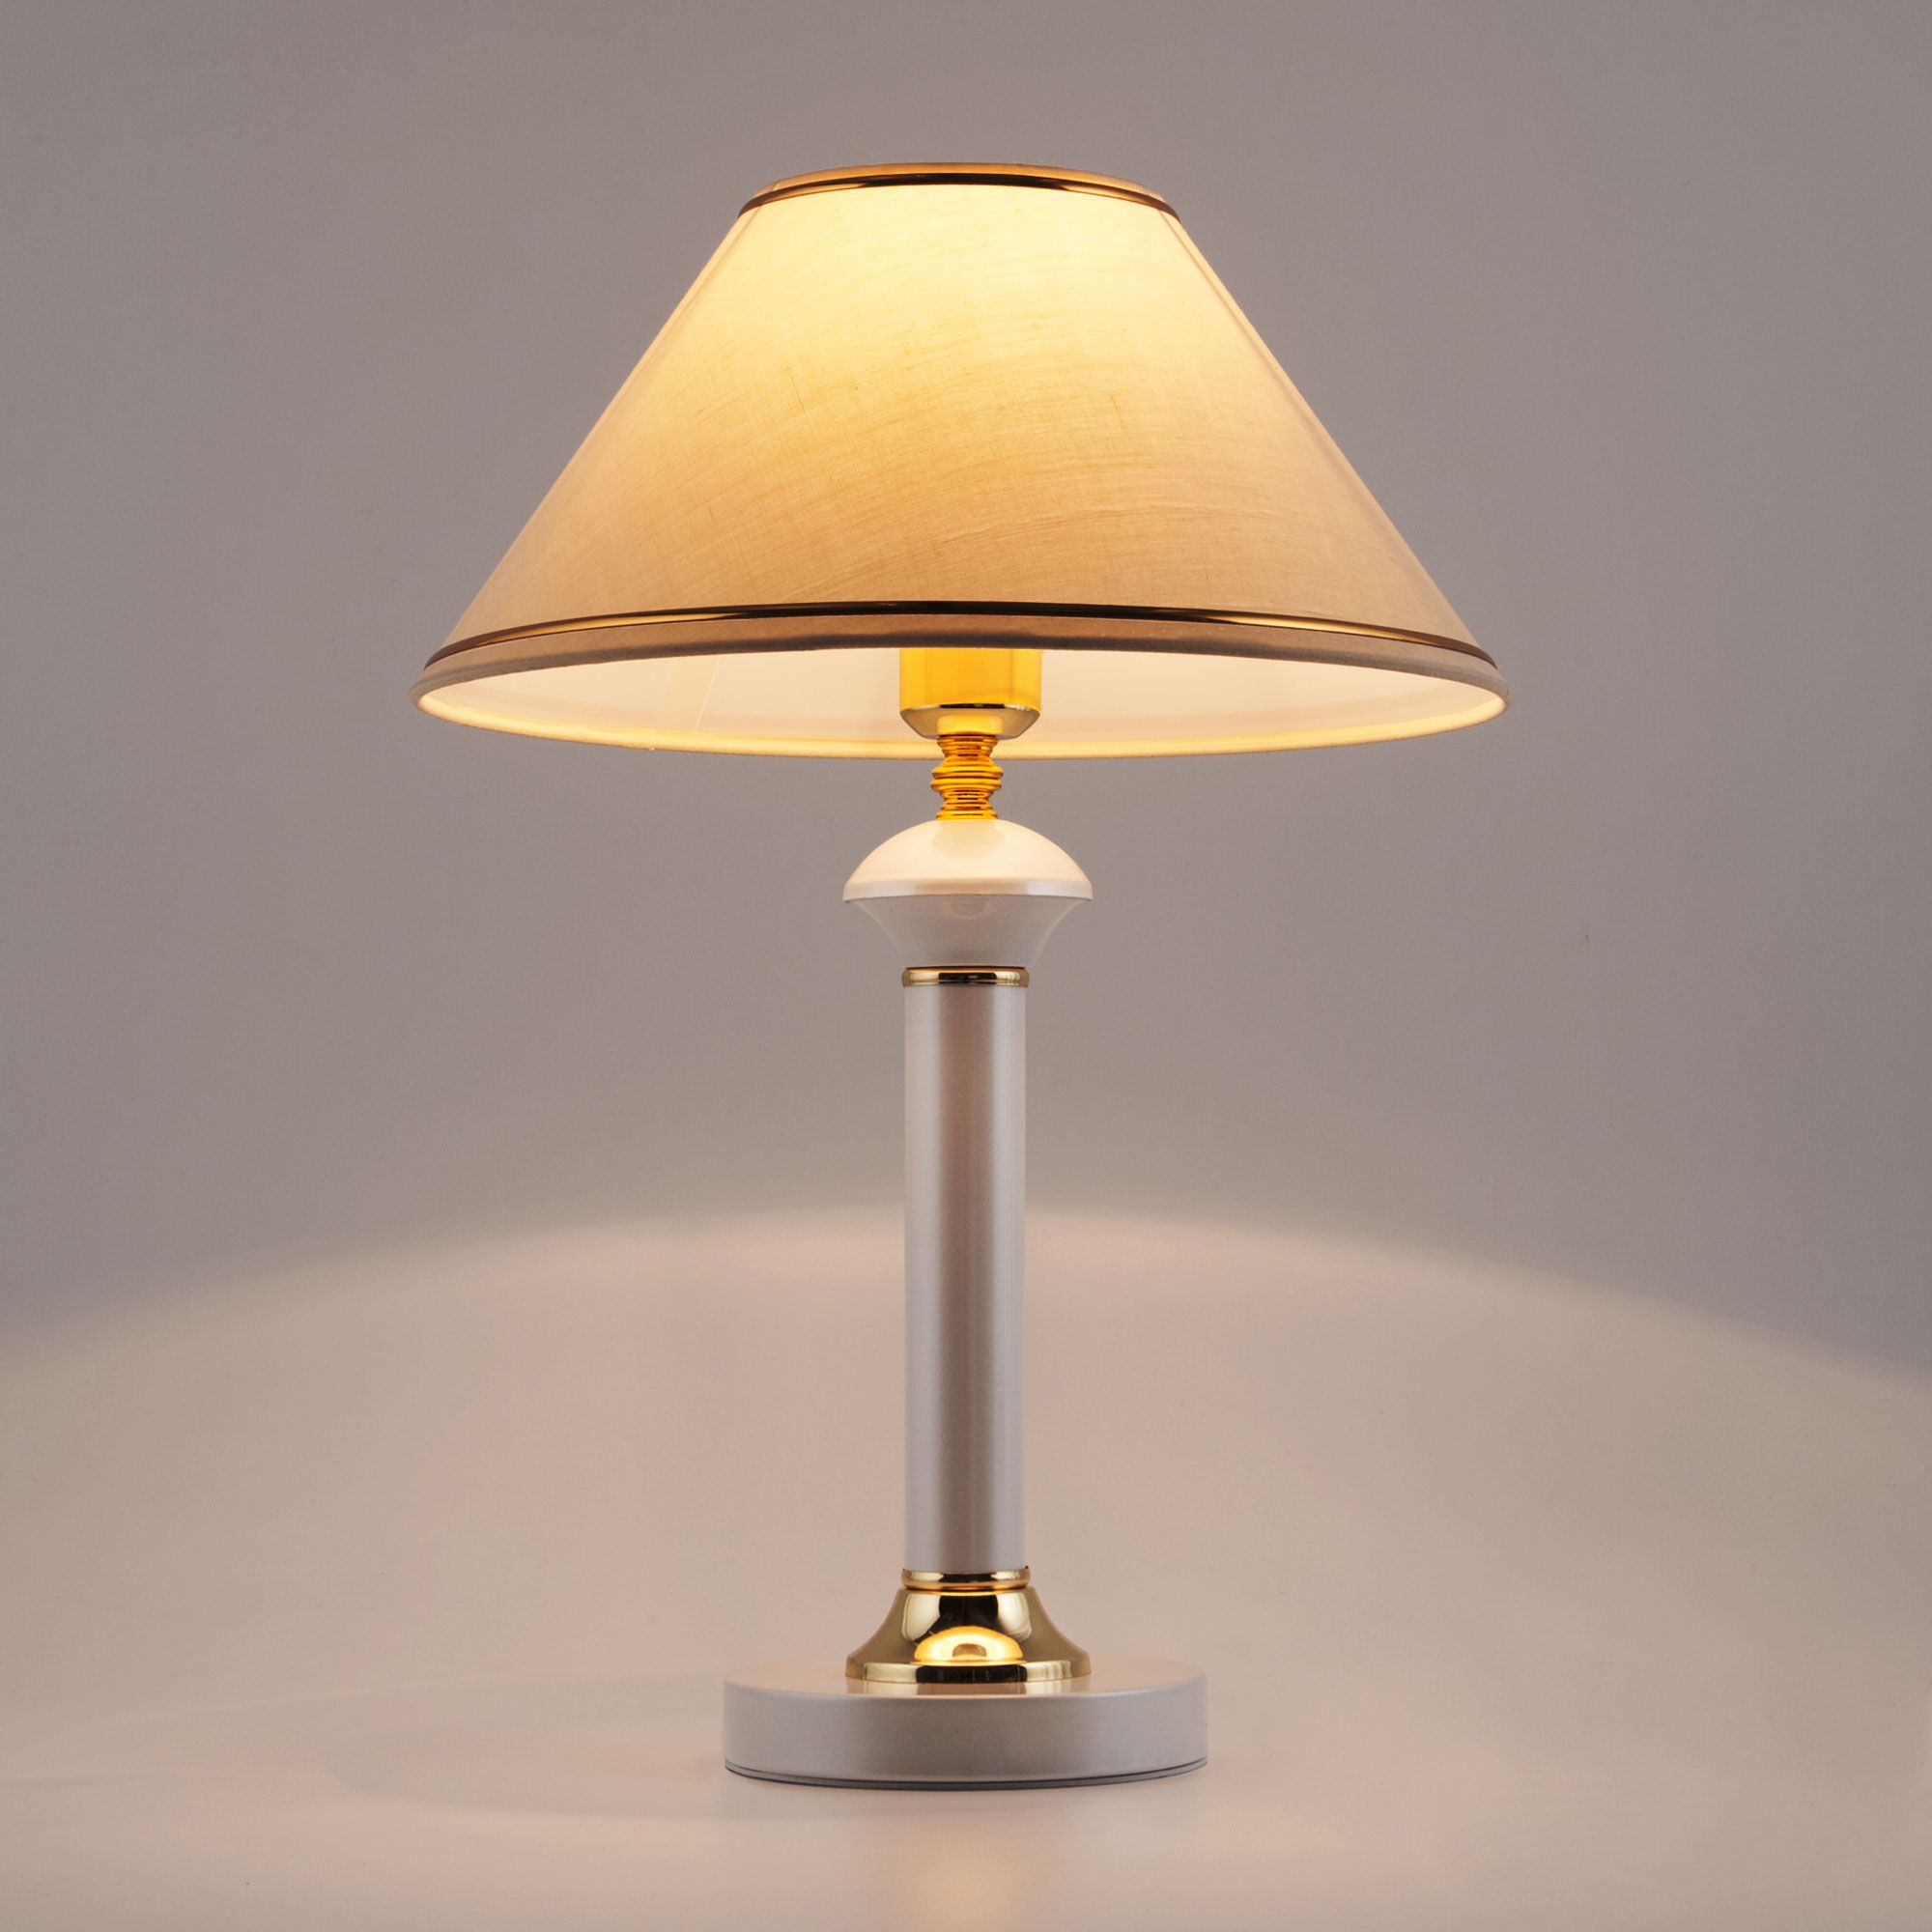 Настольный светильник с тканевым абажуром Eurosvet Lorenzo 60019/1 глянцевый белый. Фото 4